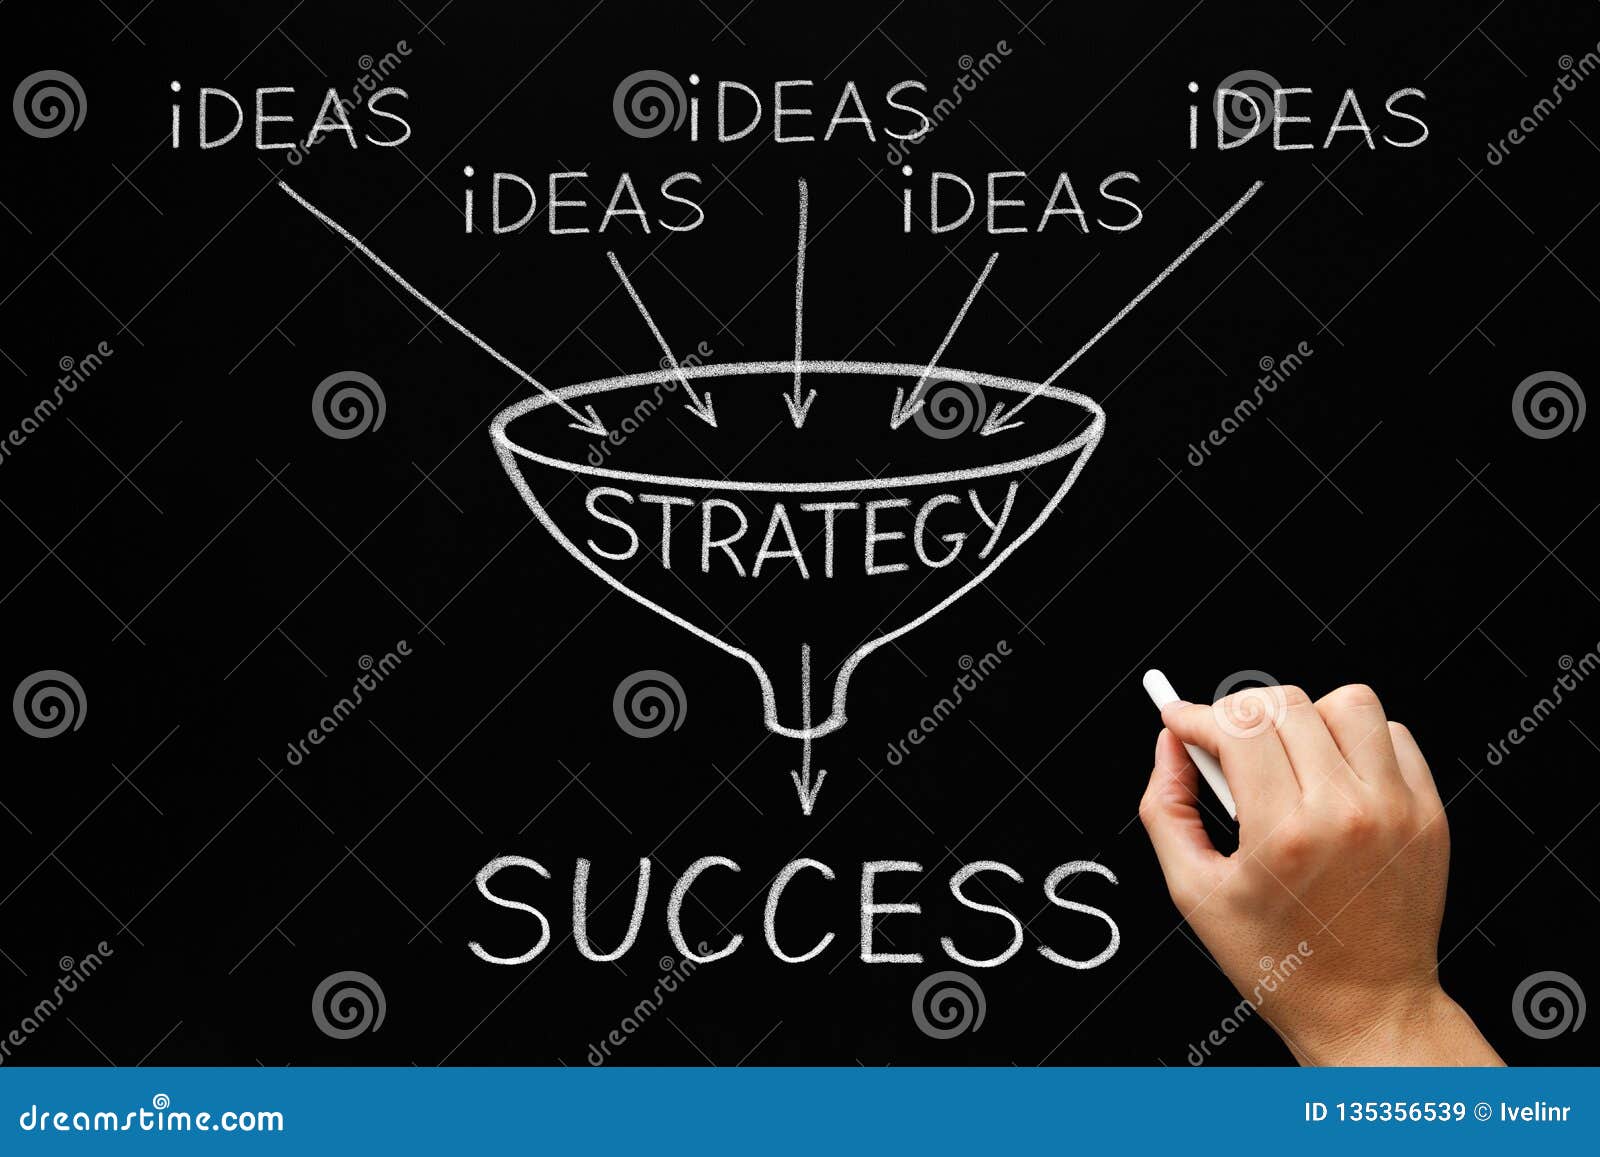 ideas strategy success funnel concept